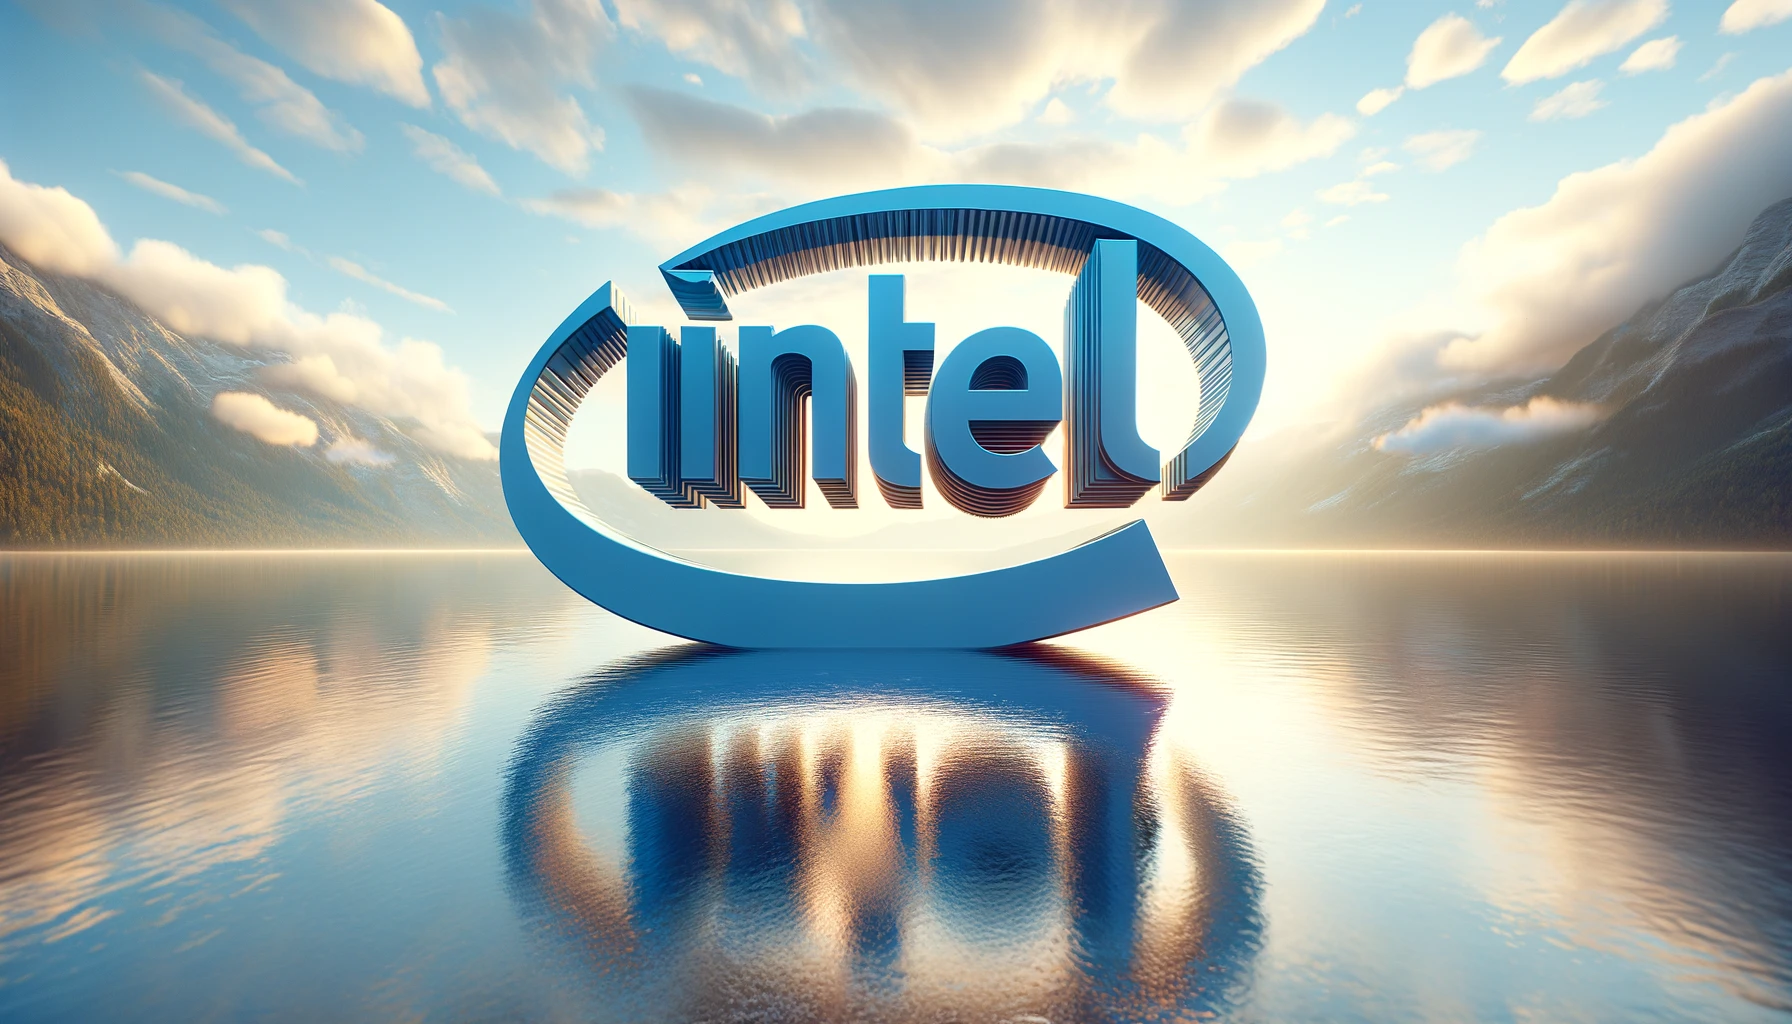 Arrow Lake-PS is coming: Intel unveils new LGA 1851 socket